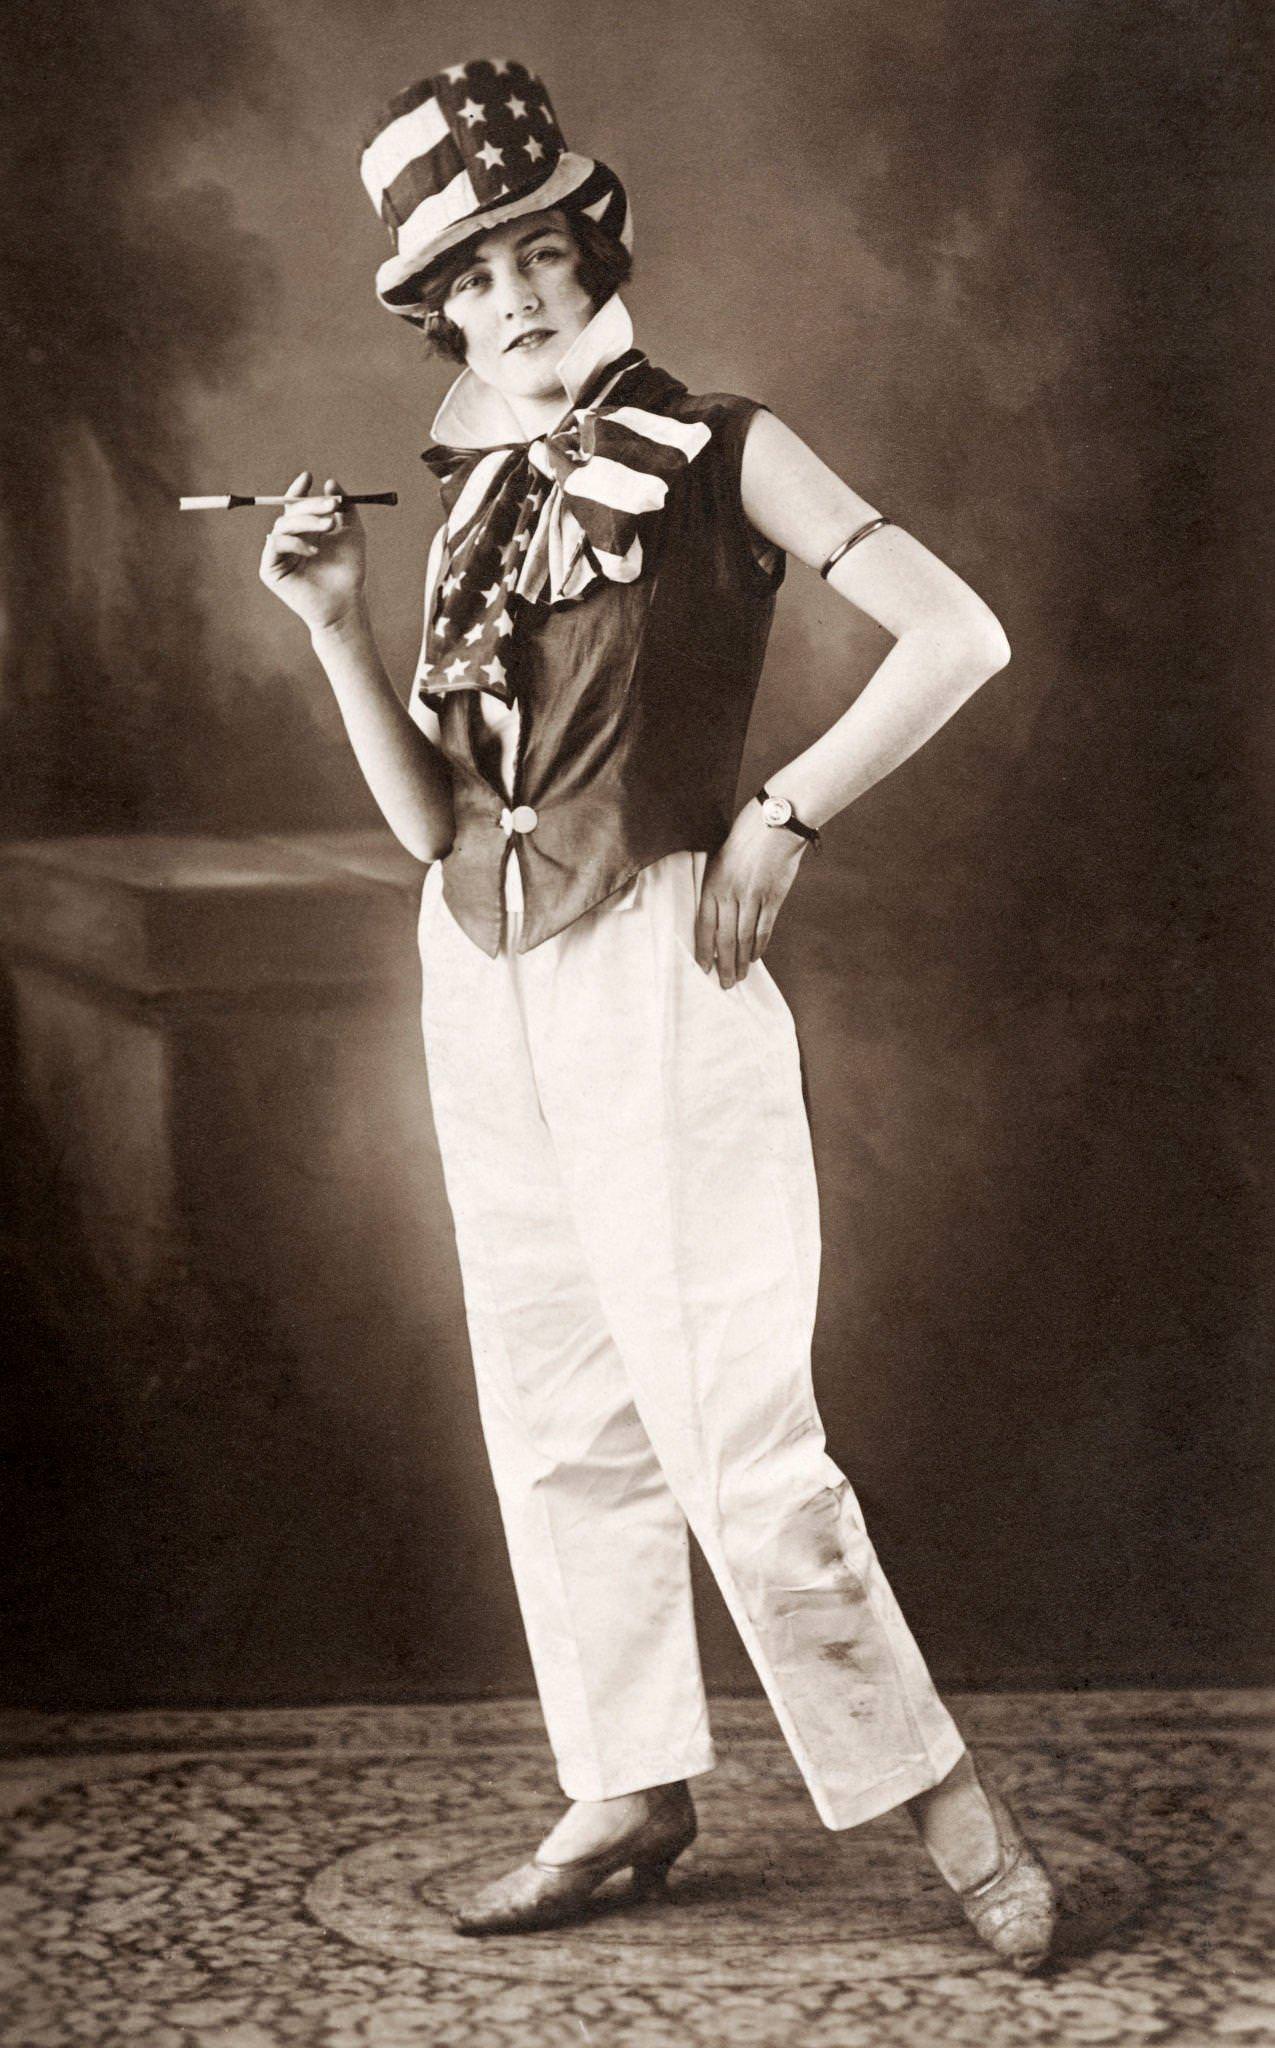 Vintage Fashion: American Motif with Cigarette Holder, 1920